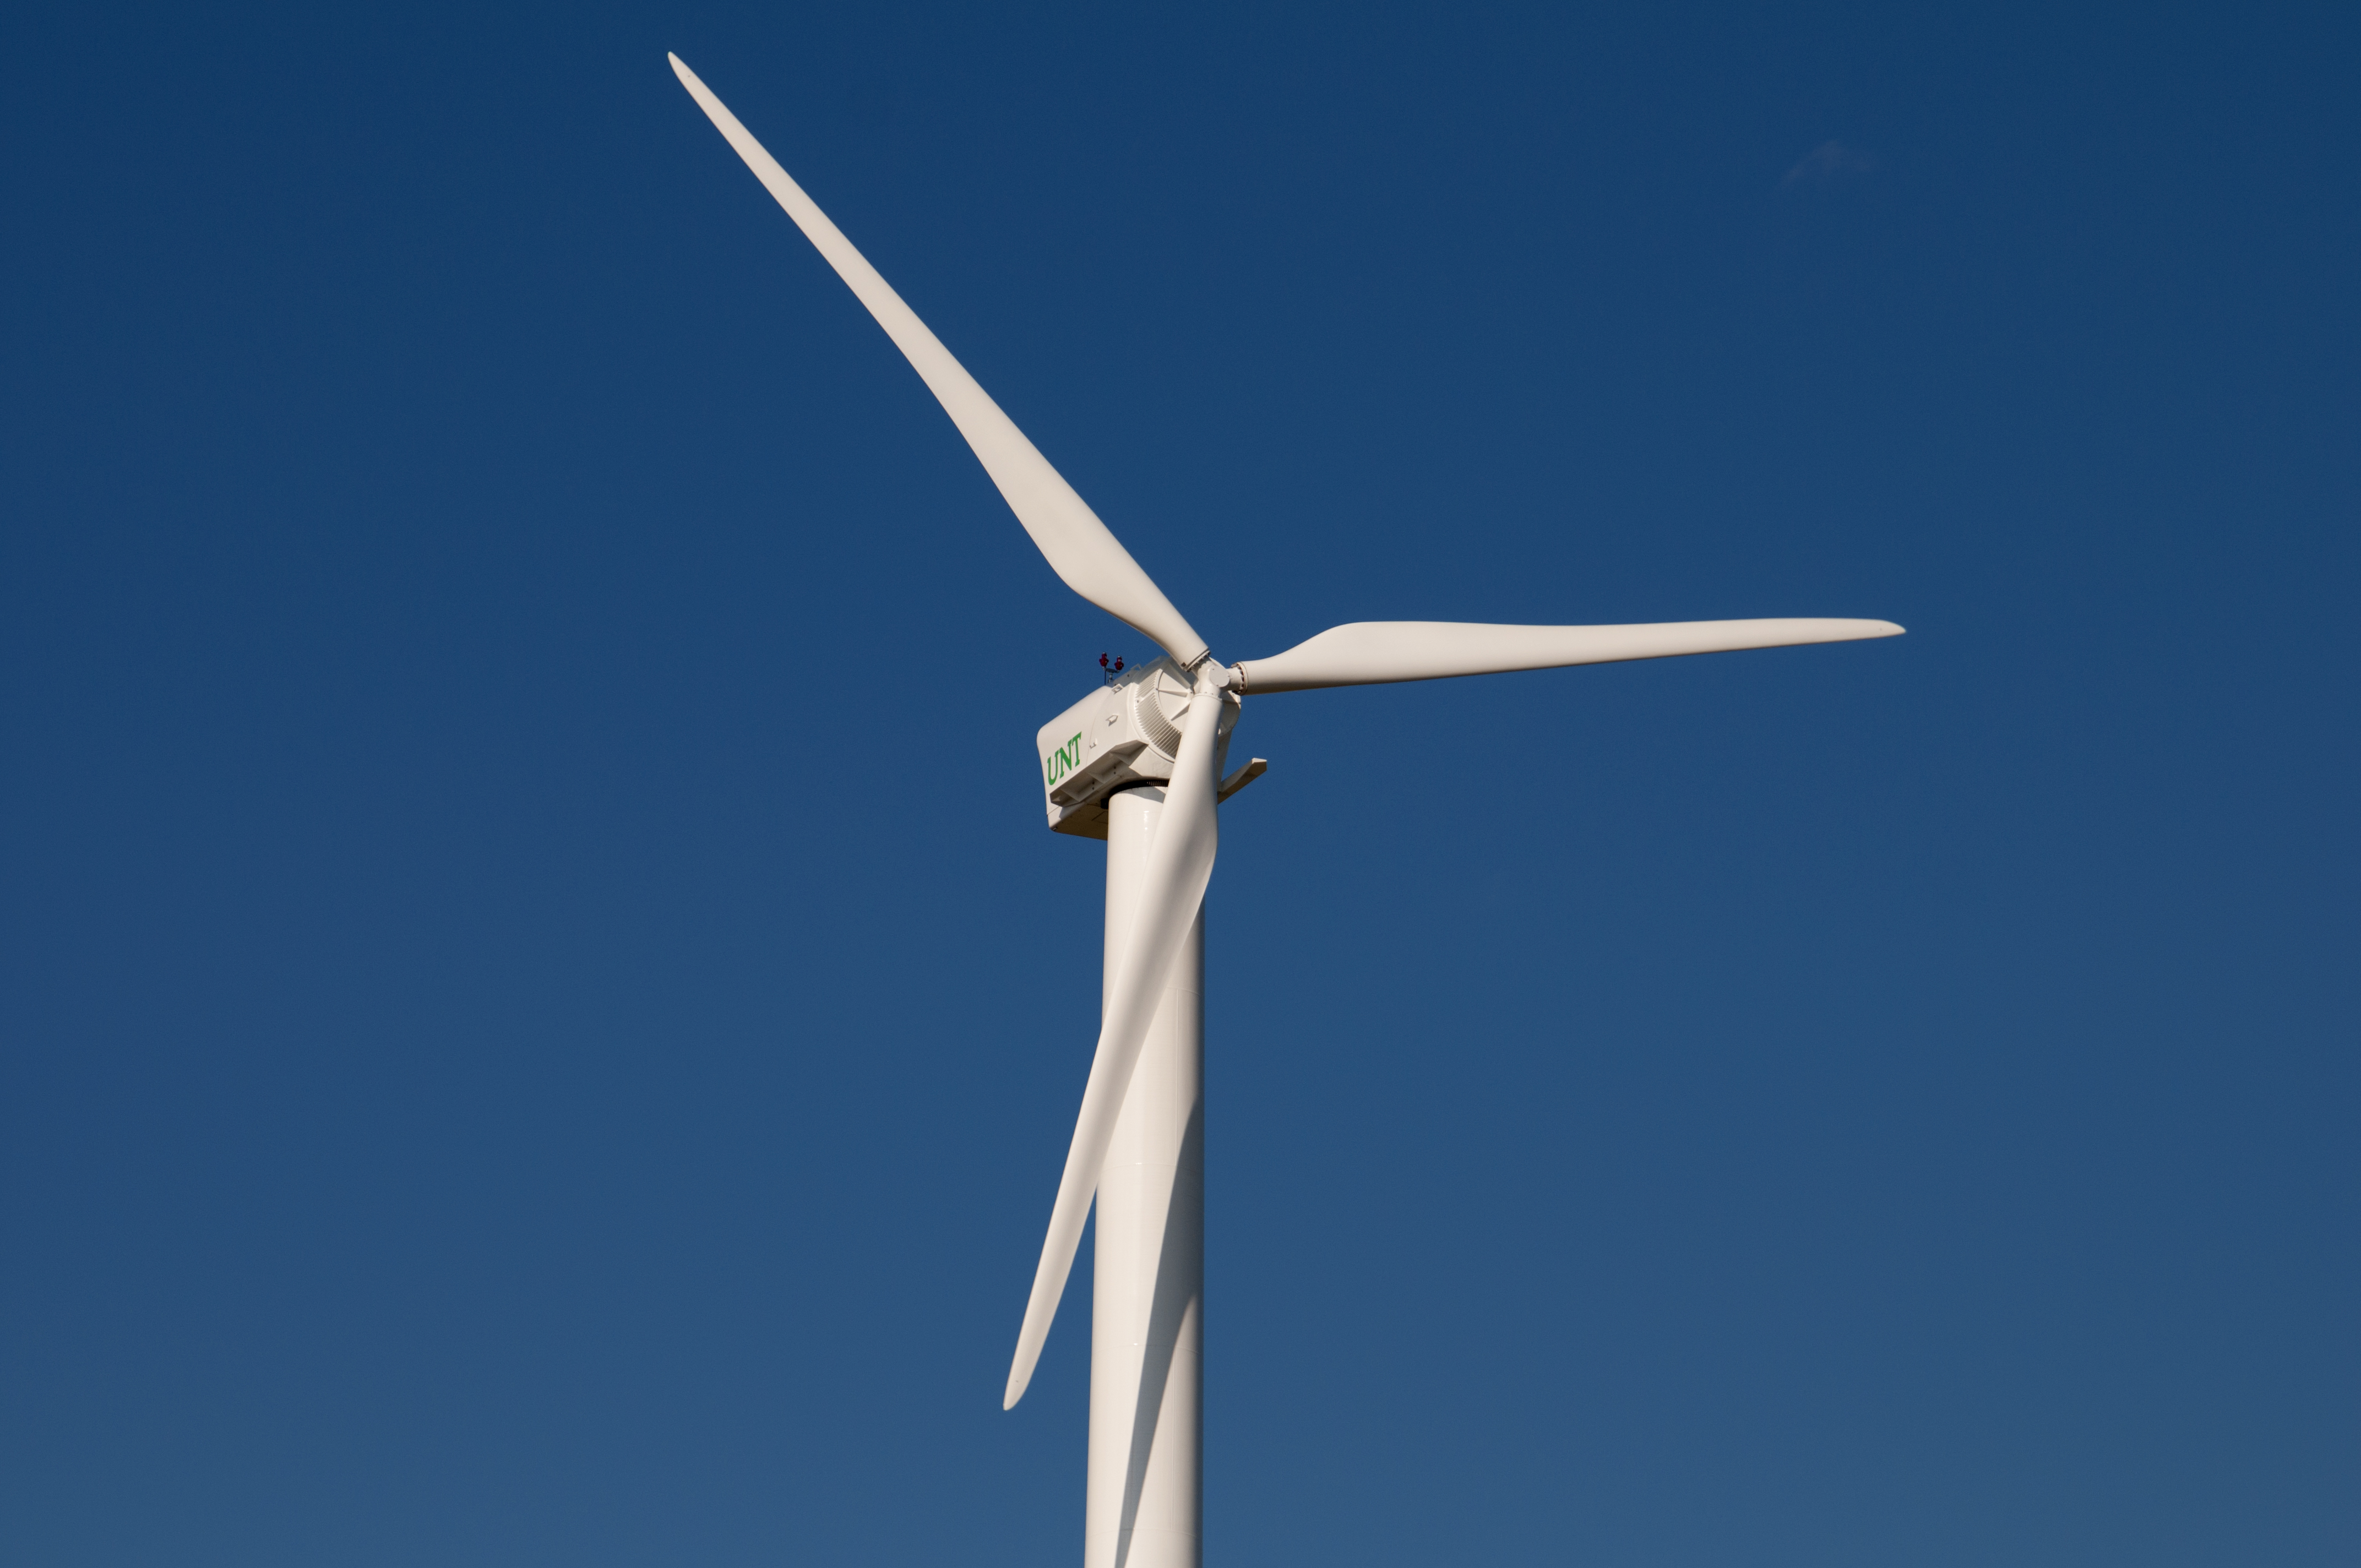 University of North Texas wind turbines reduce school's carbon footprint.